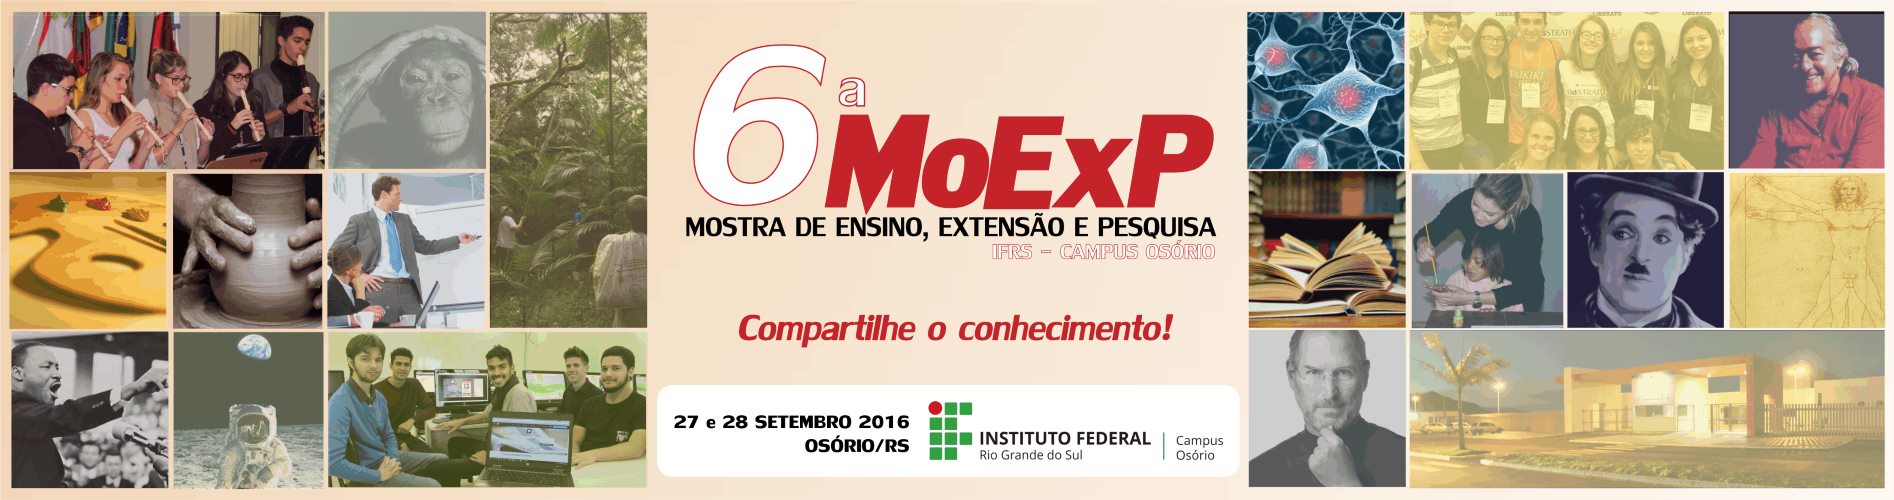 Logo6moexp